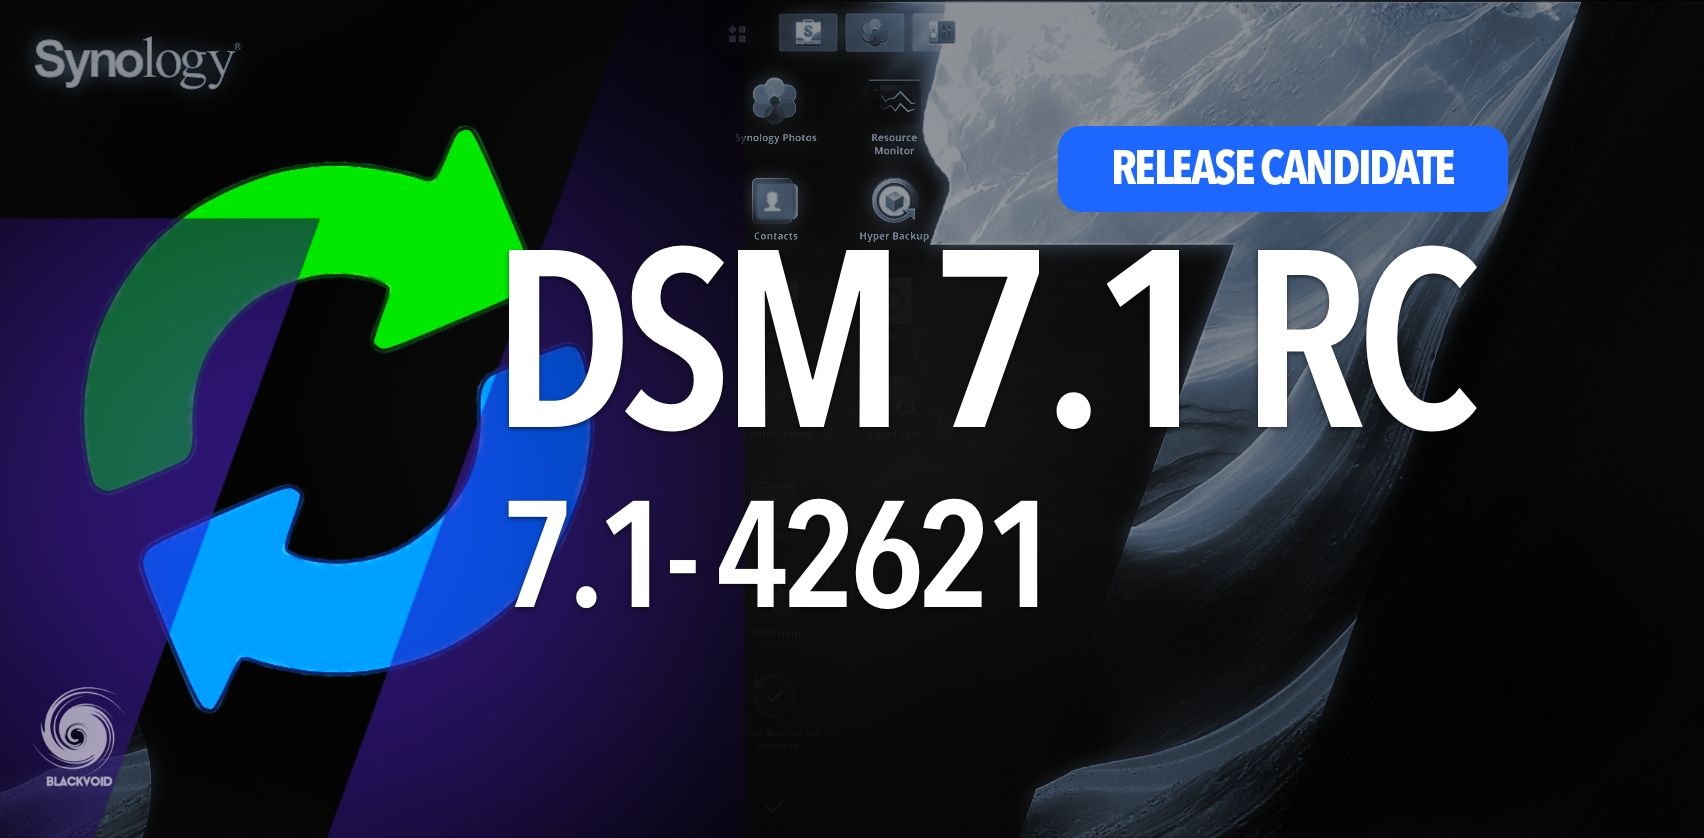 DSM 7.1-42621 RC